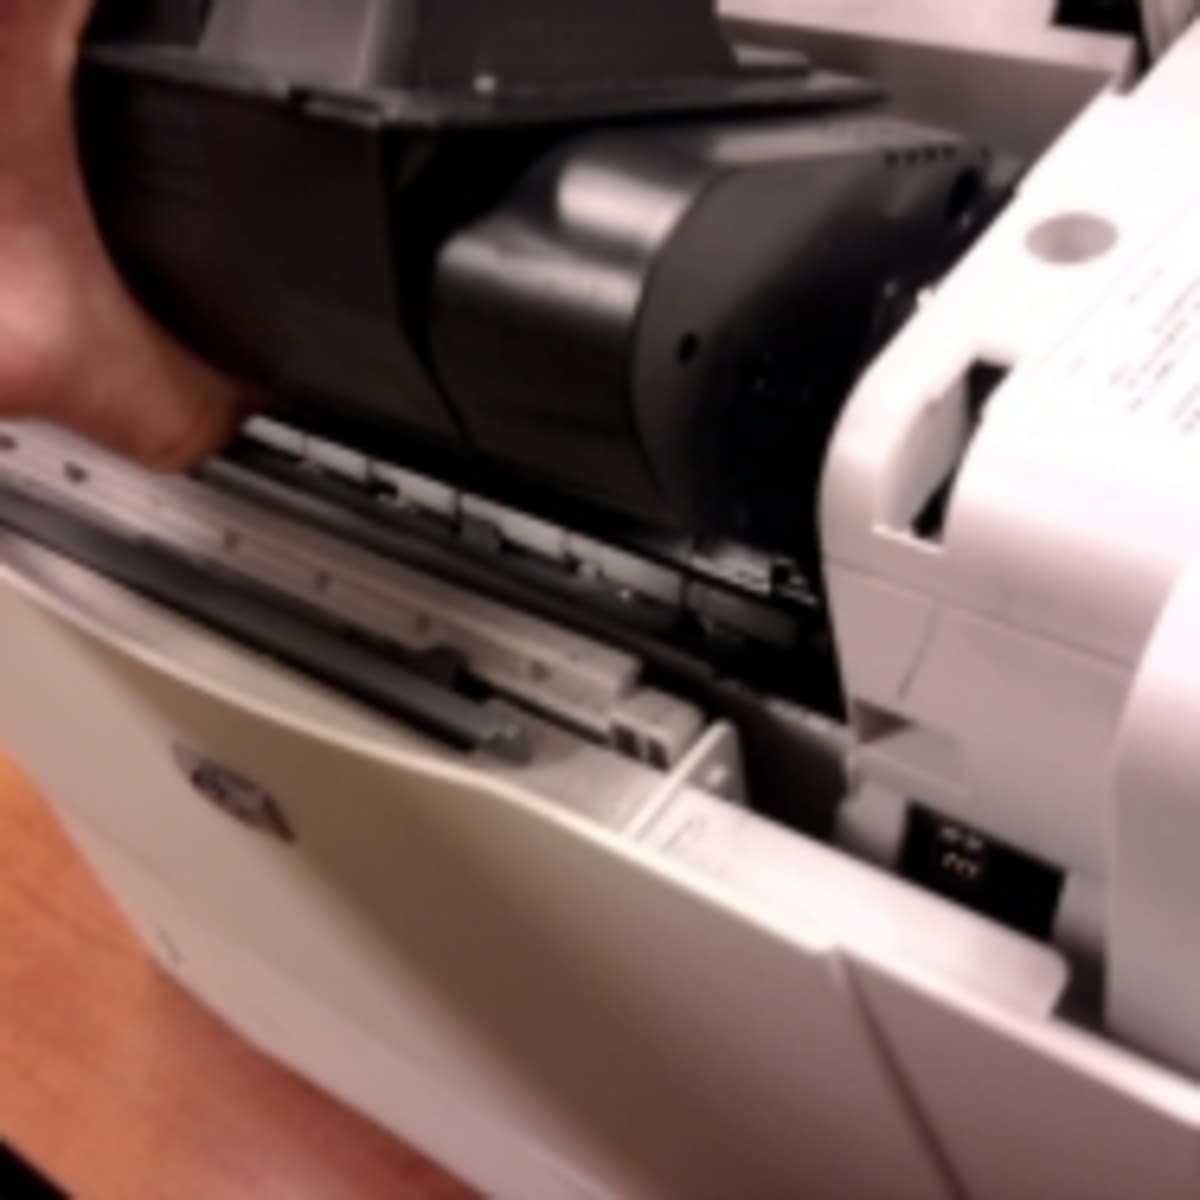 How To Laser Toner Ink Cartridge on HP LaserJet 4250n Printer - HubPages